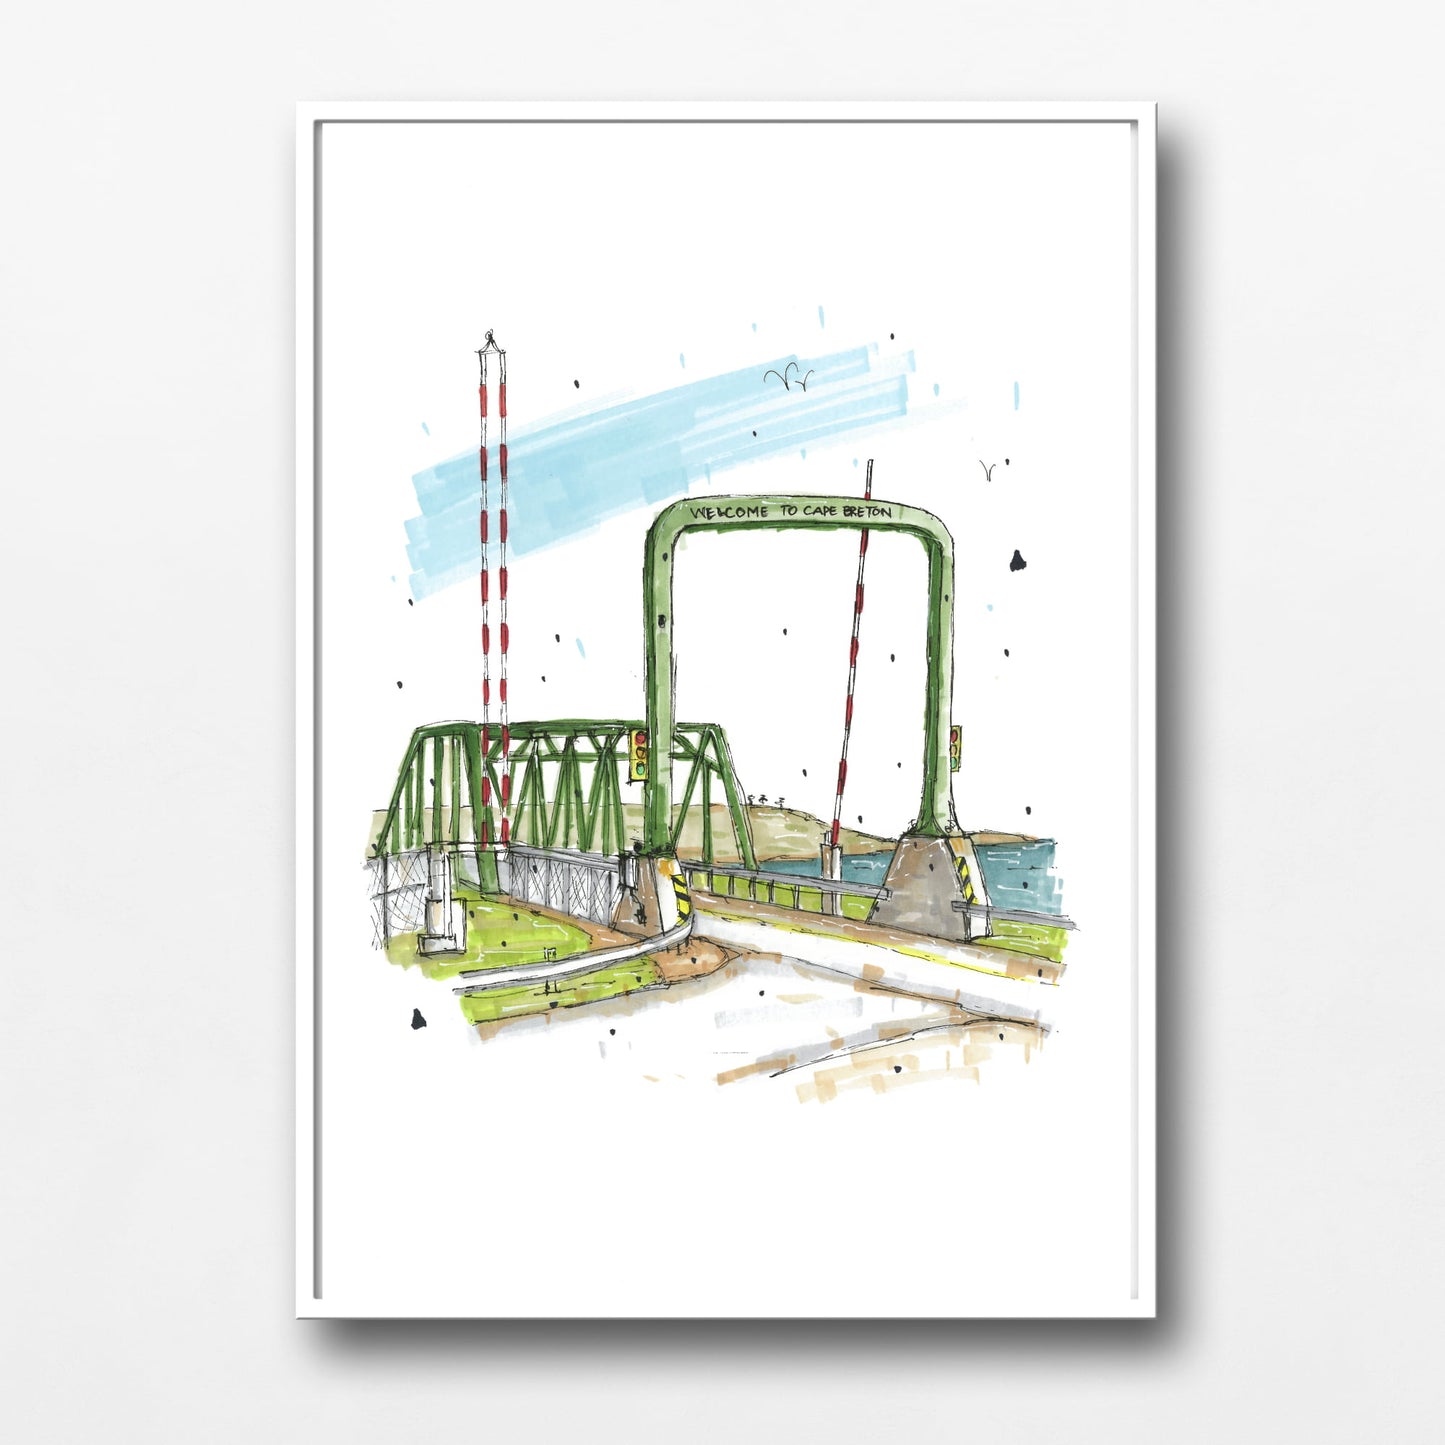 DTS0107 - Canso Causeway Cape Breton Island, Print, Downtownsketcher, Wynand van Niekerk, DTS0087